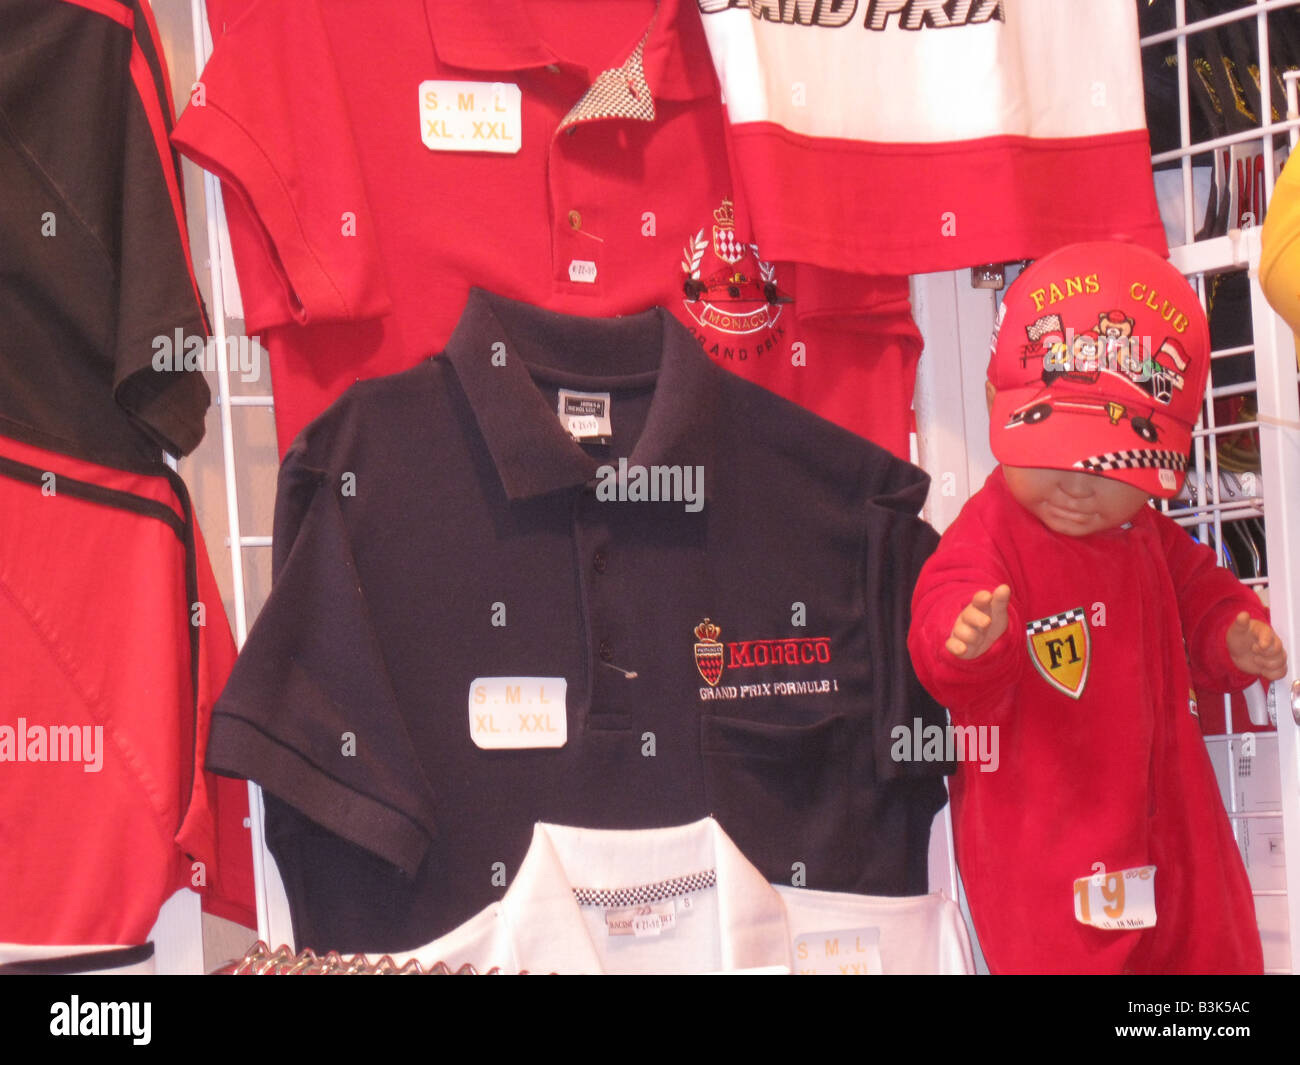 MONACO - Formula 1 merchandise on sale in a shop window Stock Photo - Alamy